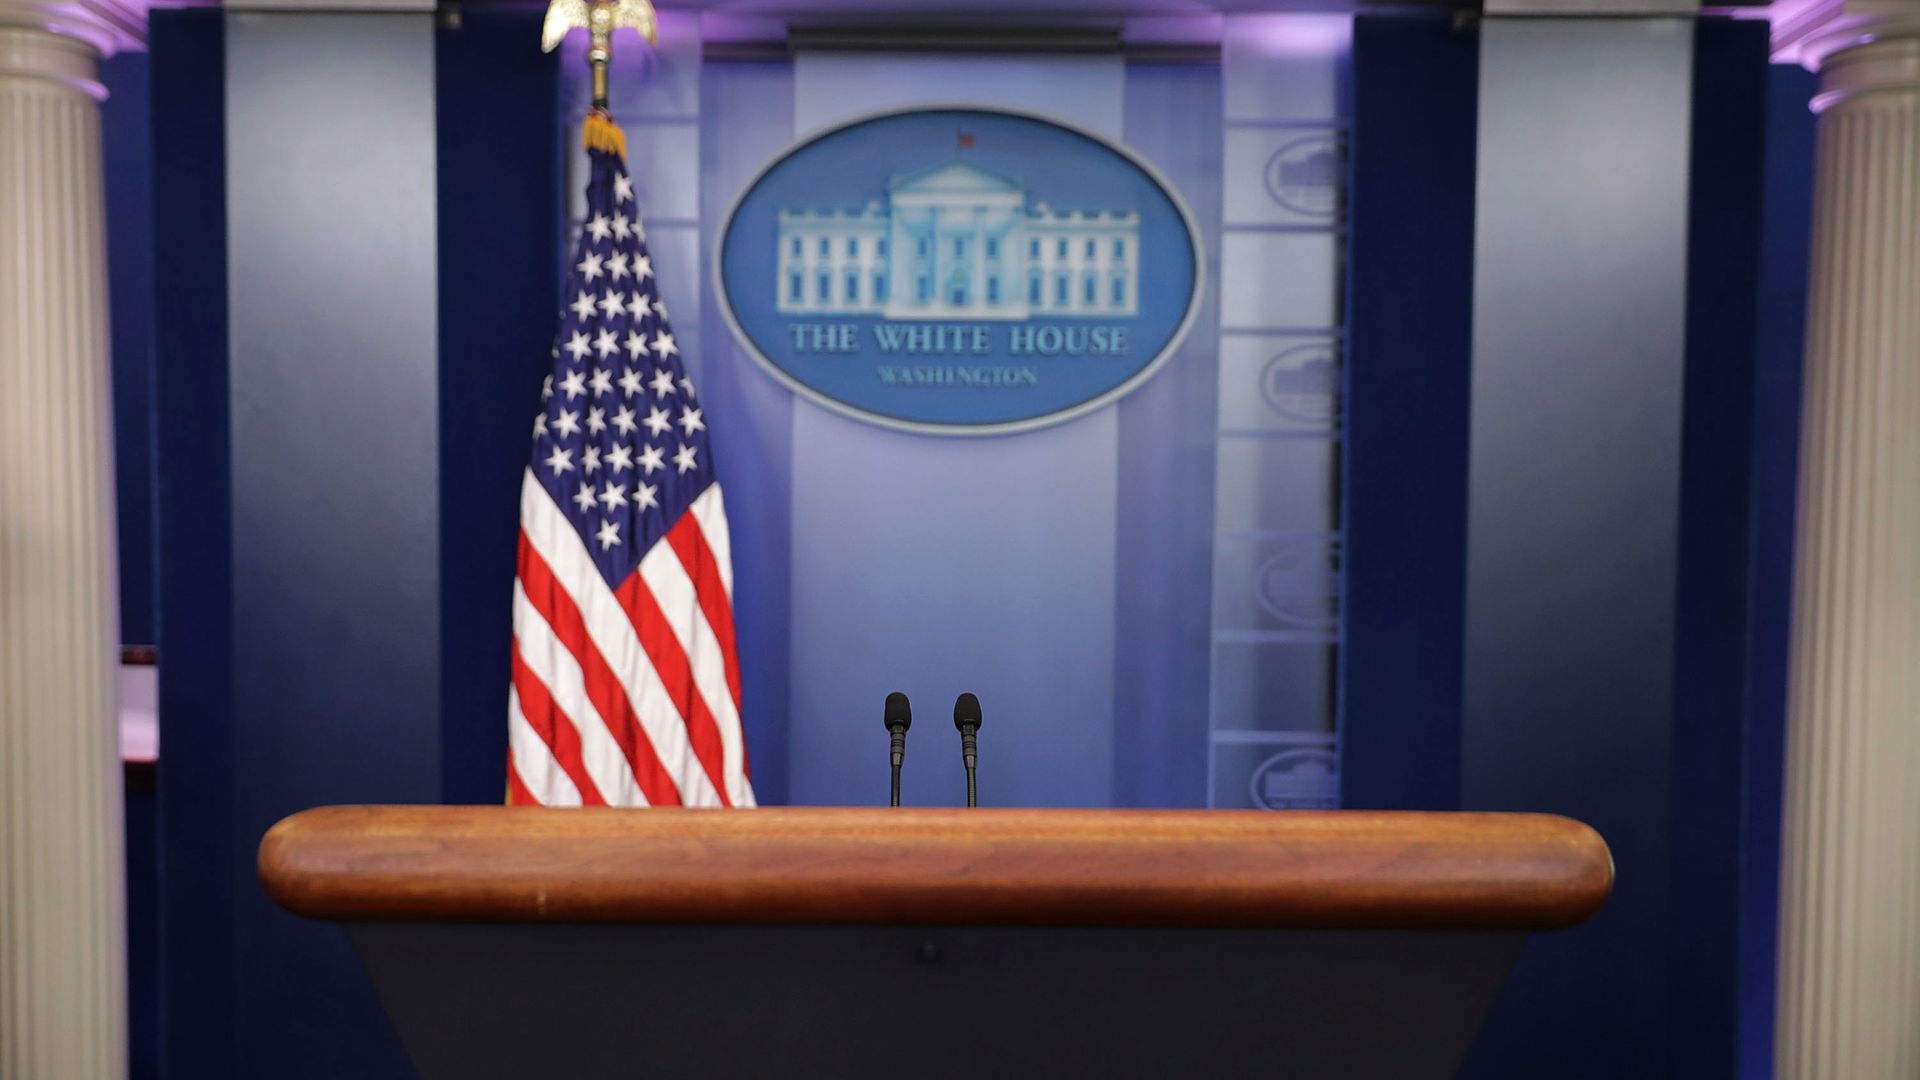 White House press briefing room podium